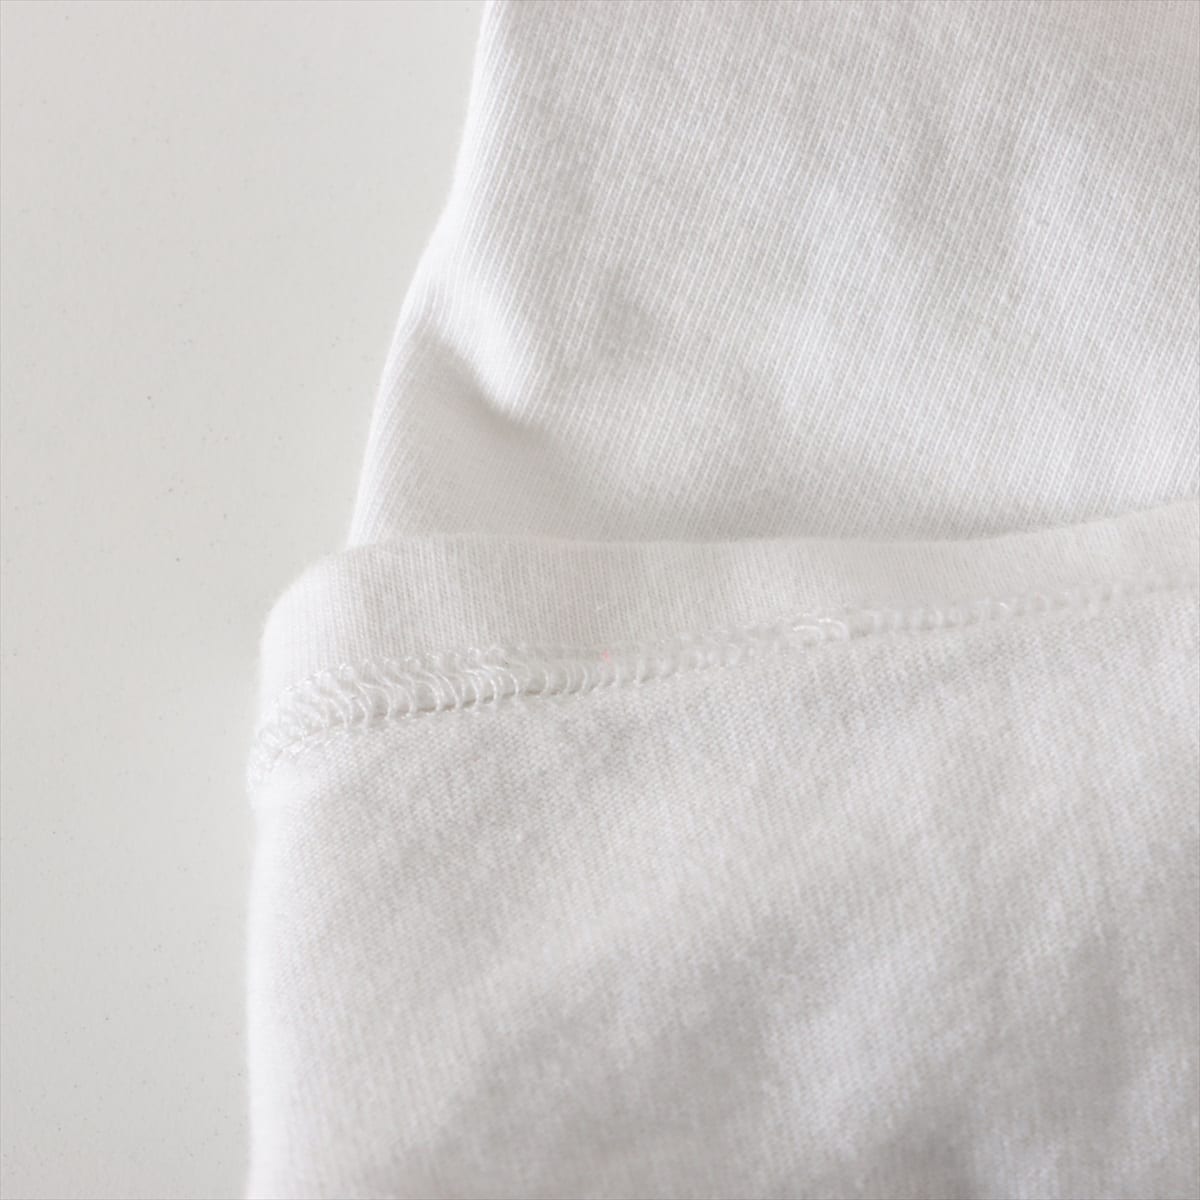 Dior x Kenny Scharf 21SS Cotton T-shirt XS Men's White  193J685D0554